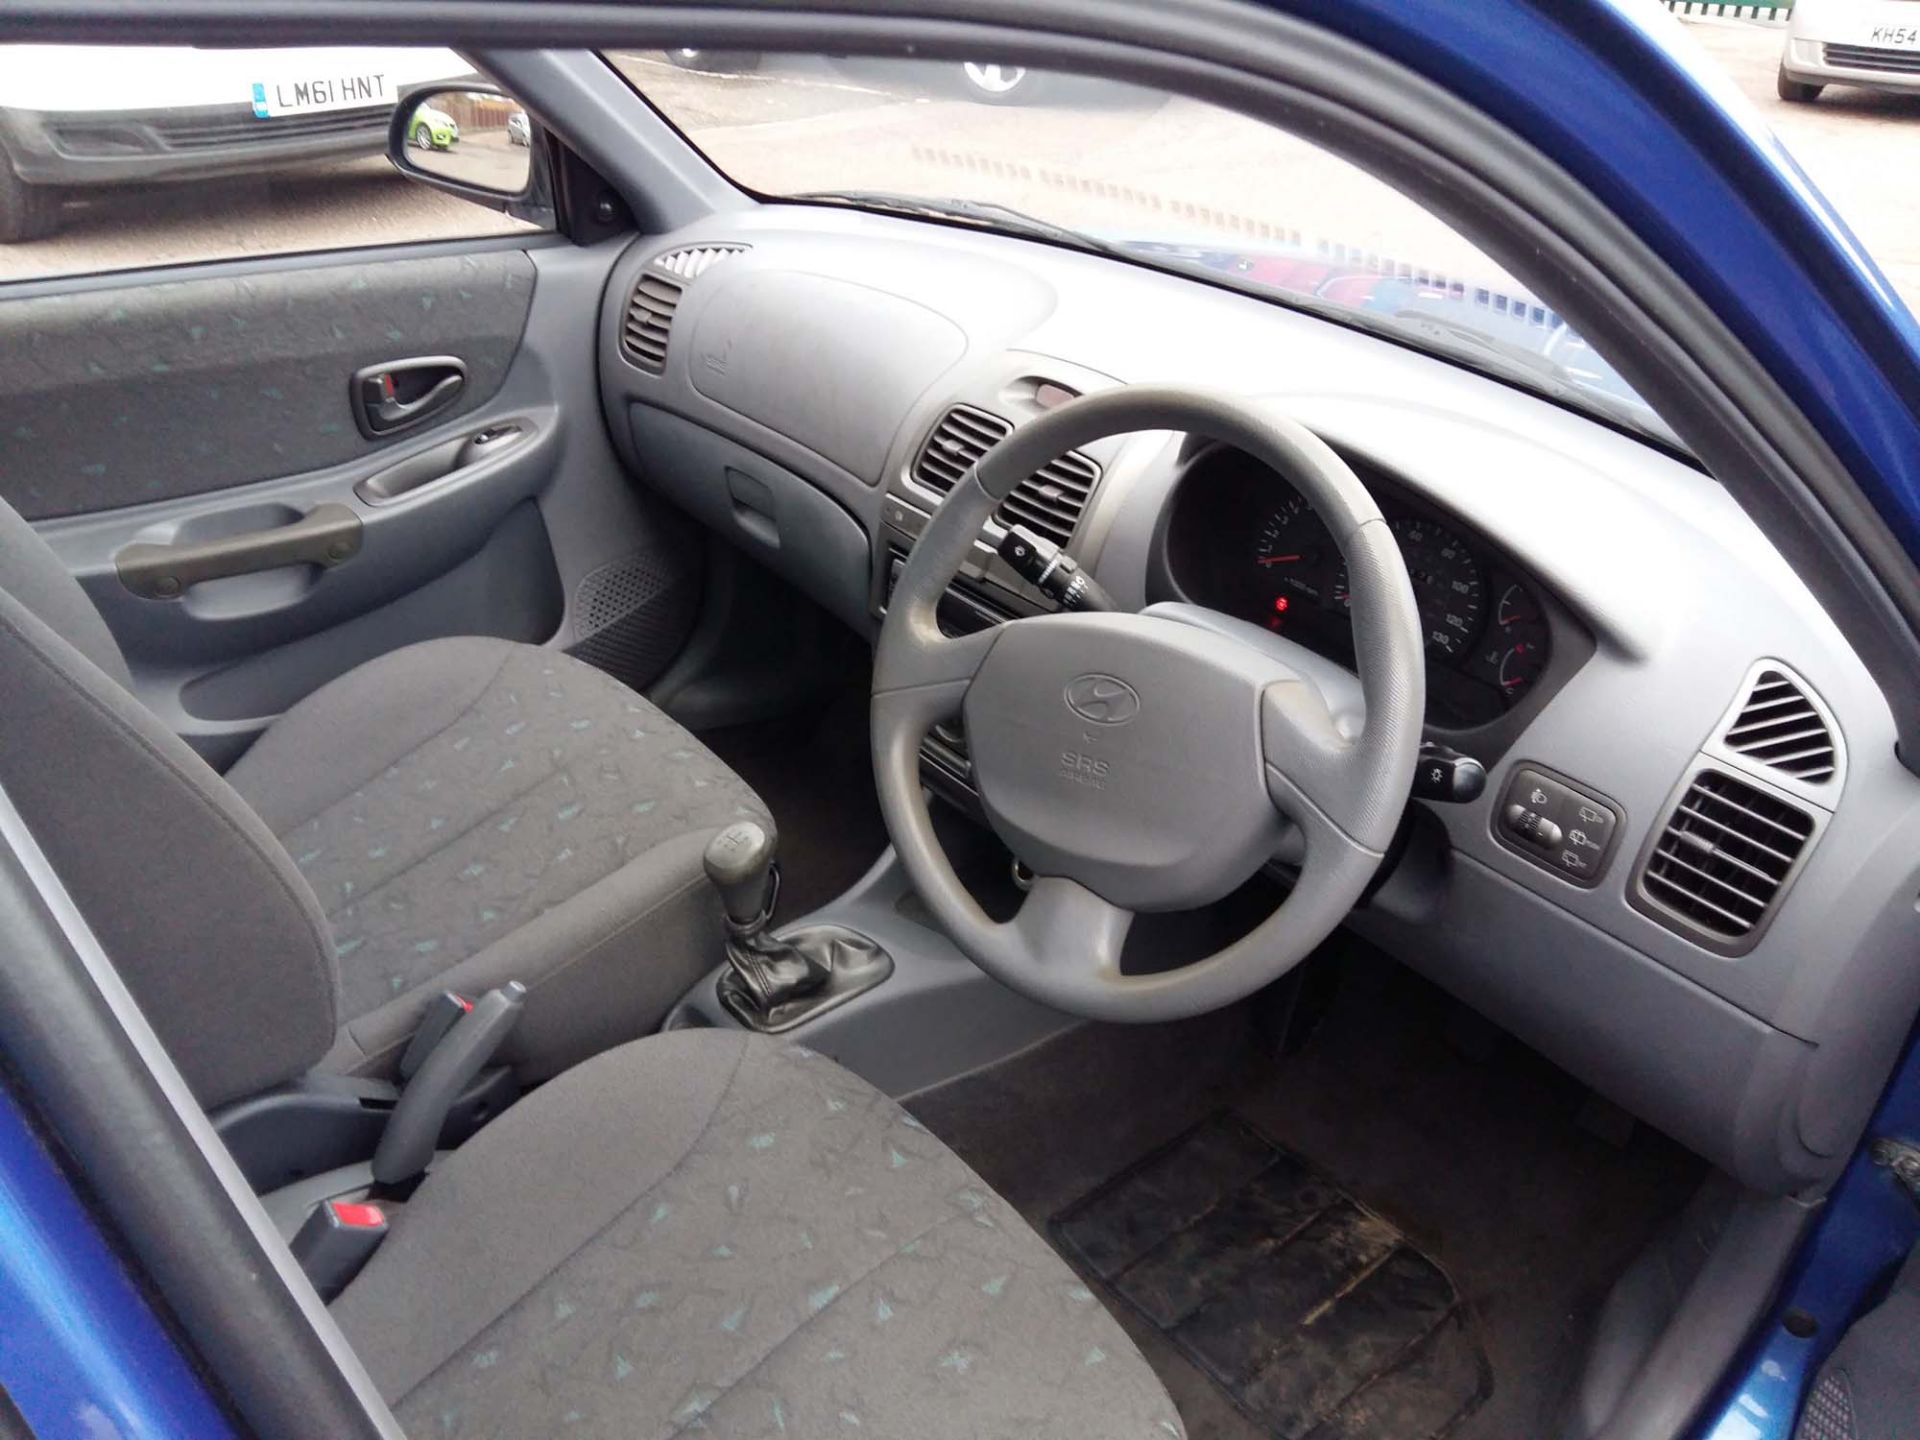 Hyundai Accent CDX 1495cc petrol 5 door hatchback Registration number: Y587 PVS First Registered: - Image 6 of 9